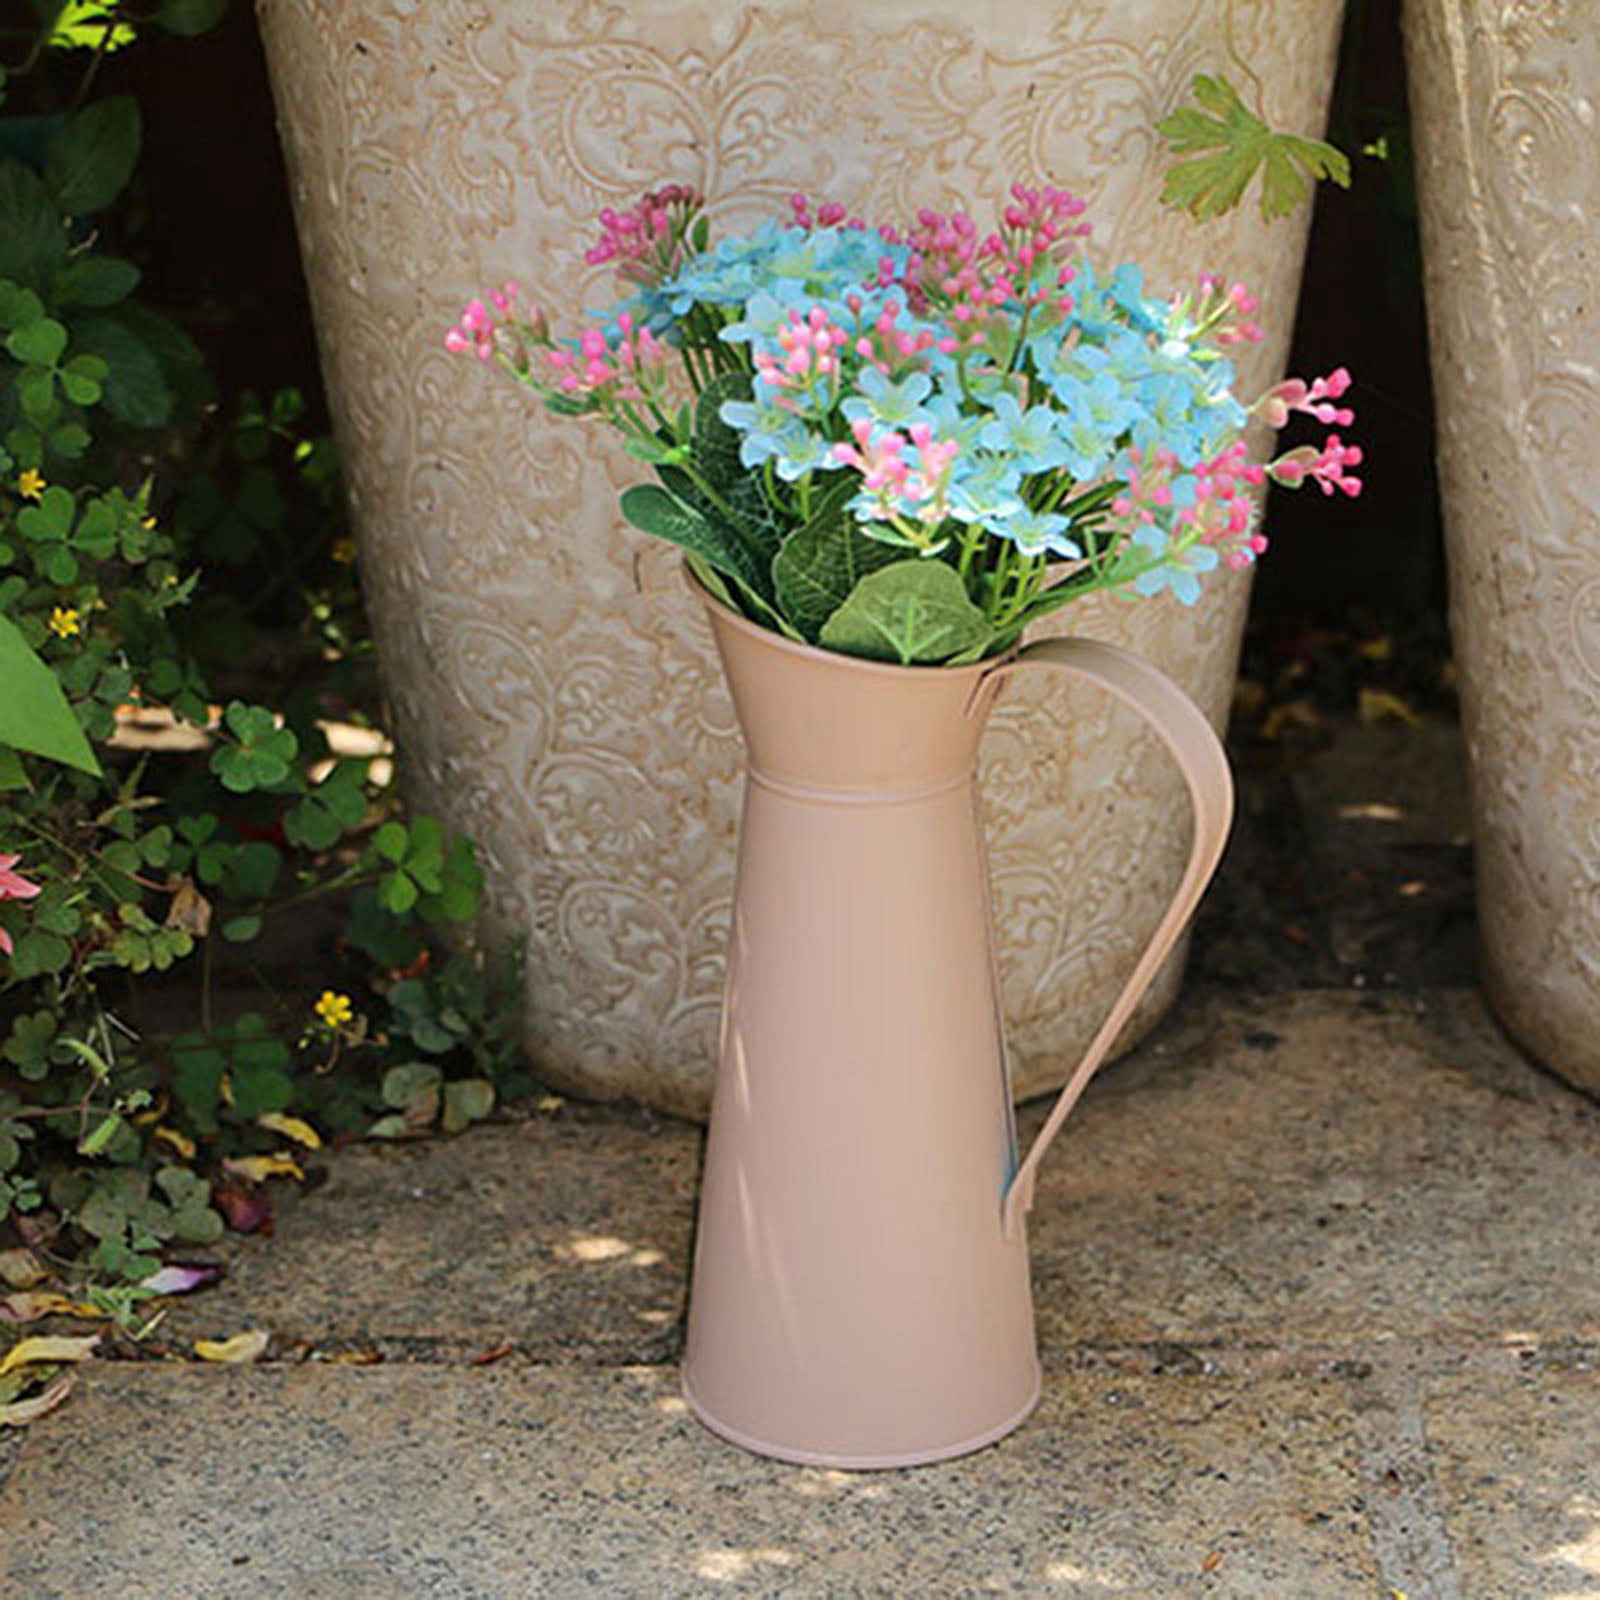 1 X Shabby Chic Country Vintage Retro Jug Vase Flower Pitcher Wedding Home Decor 